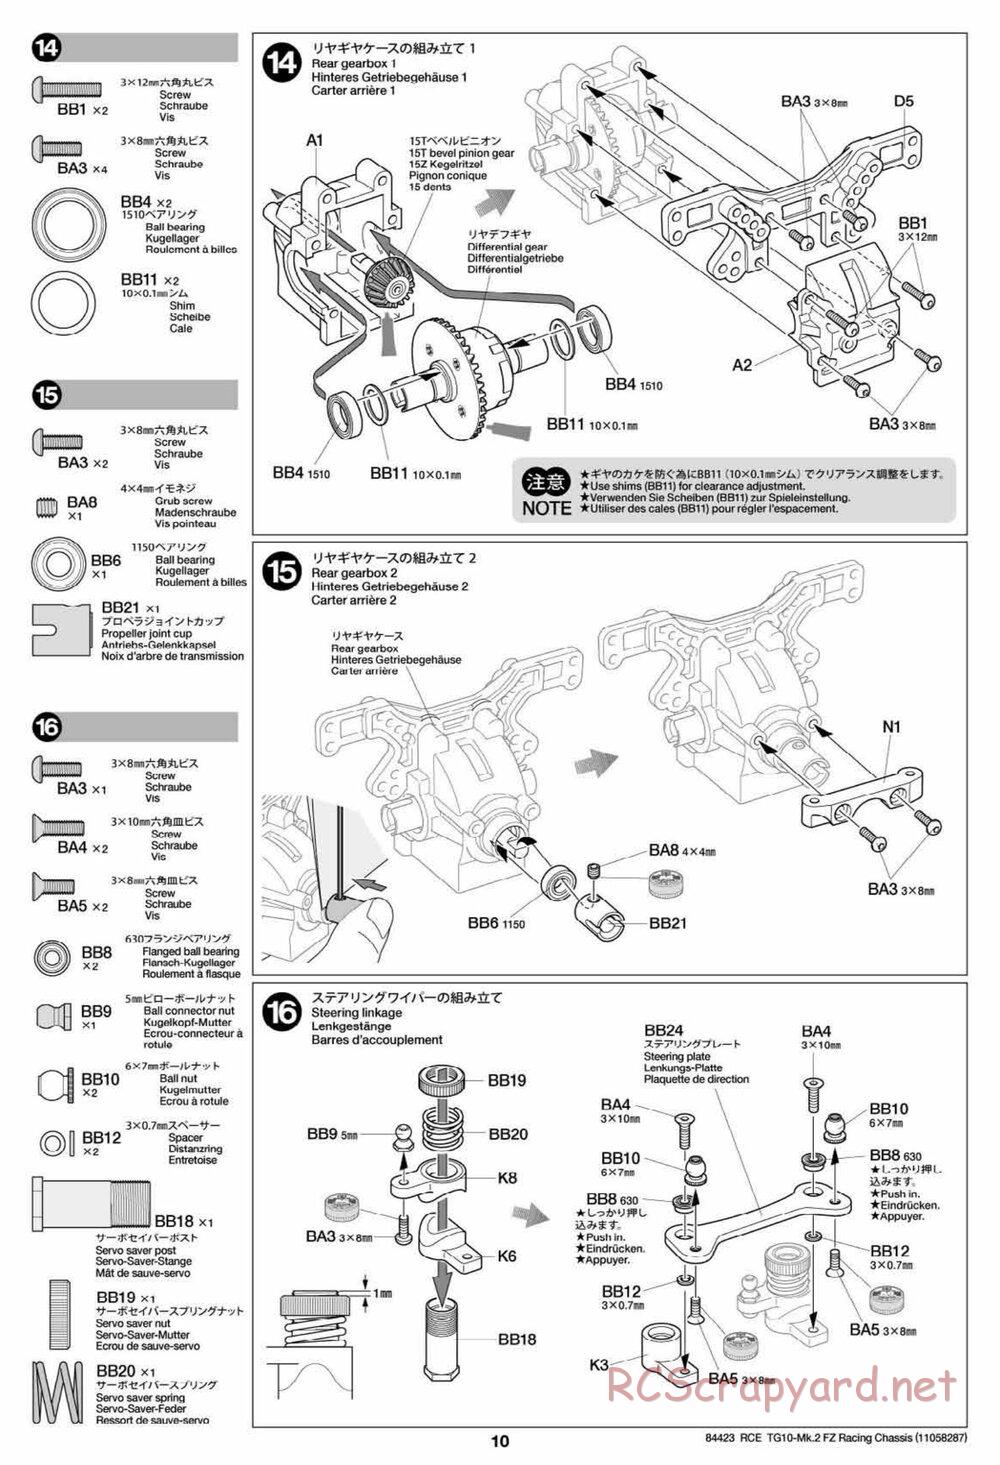 Tamiya - TG10 Mk.2 FZ Racing Chassis - Manual - Page 10